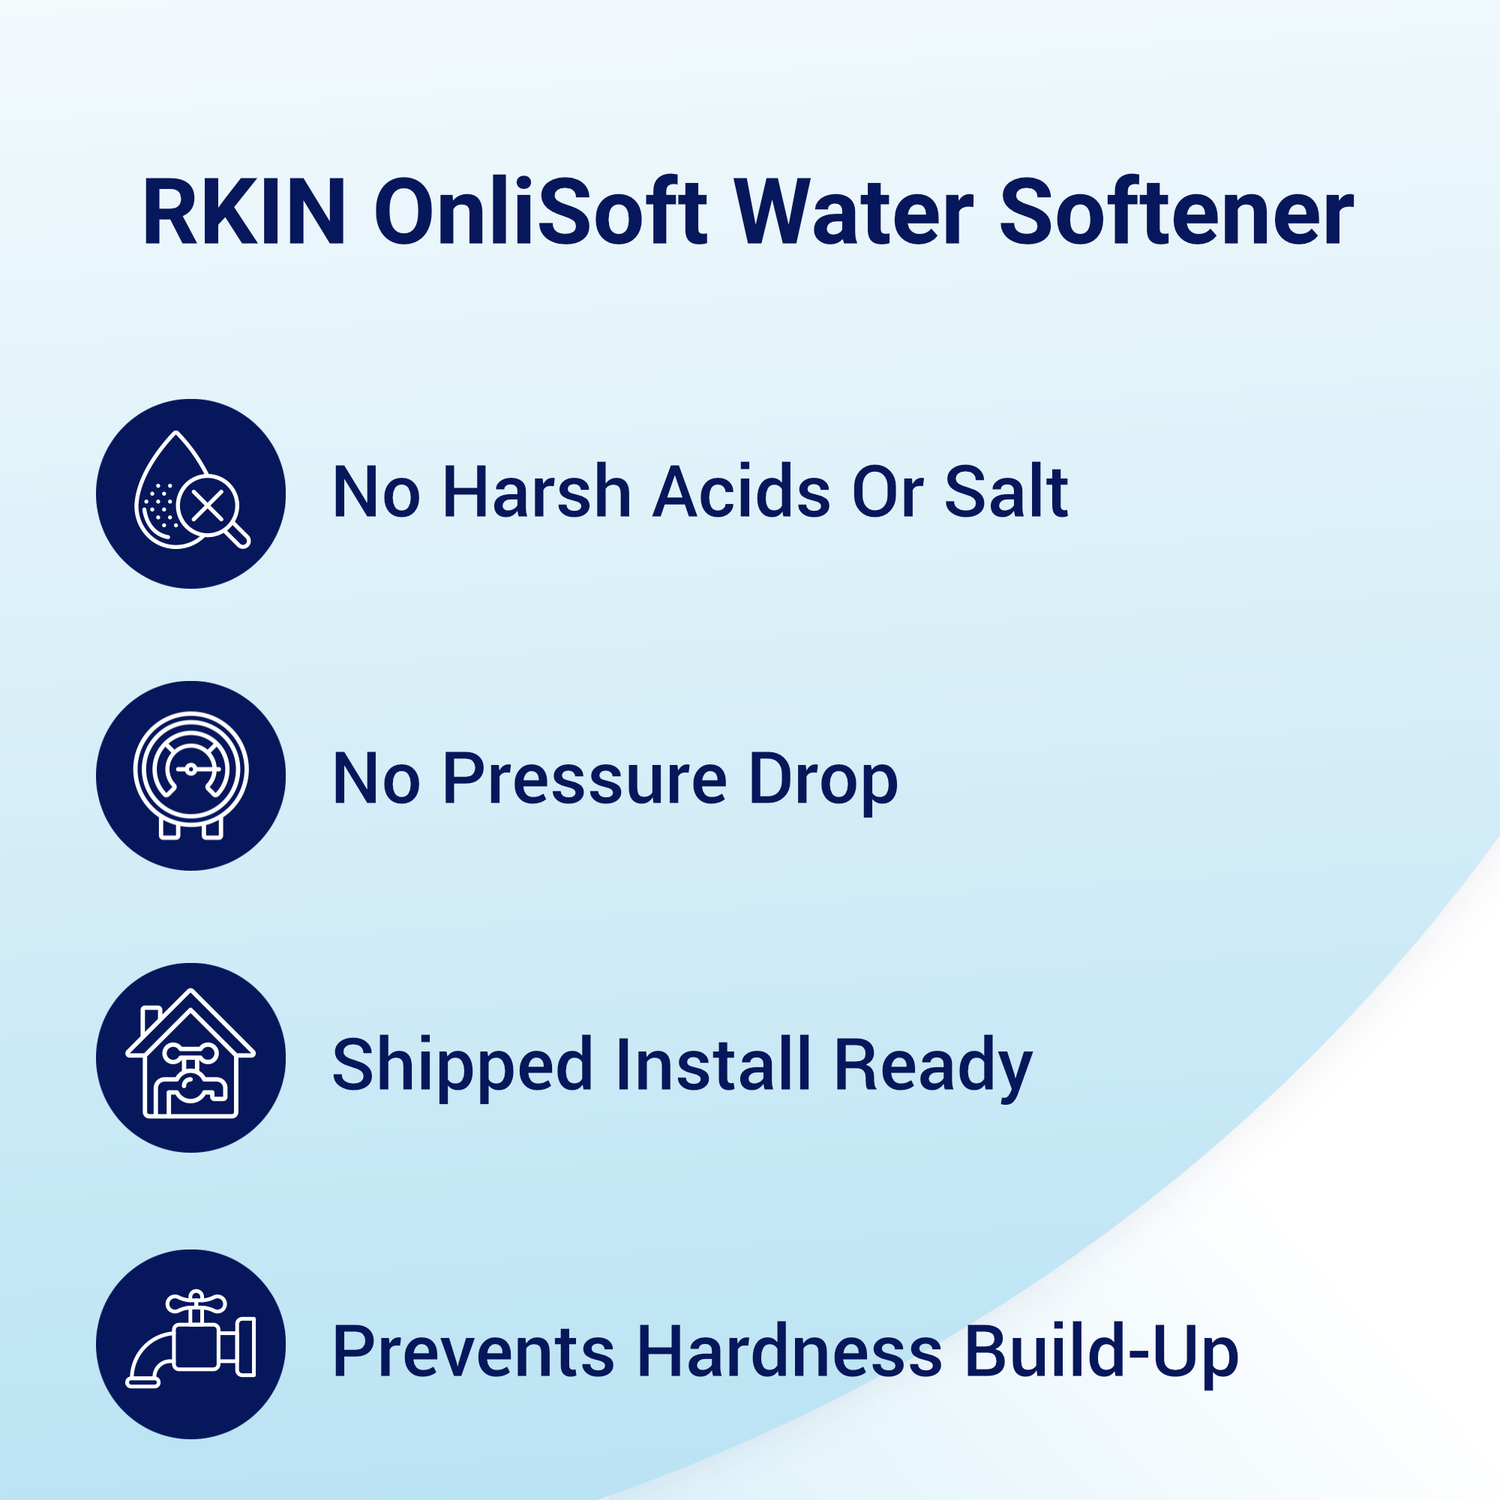 RKIN Salt-Free Water Softener Benefits